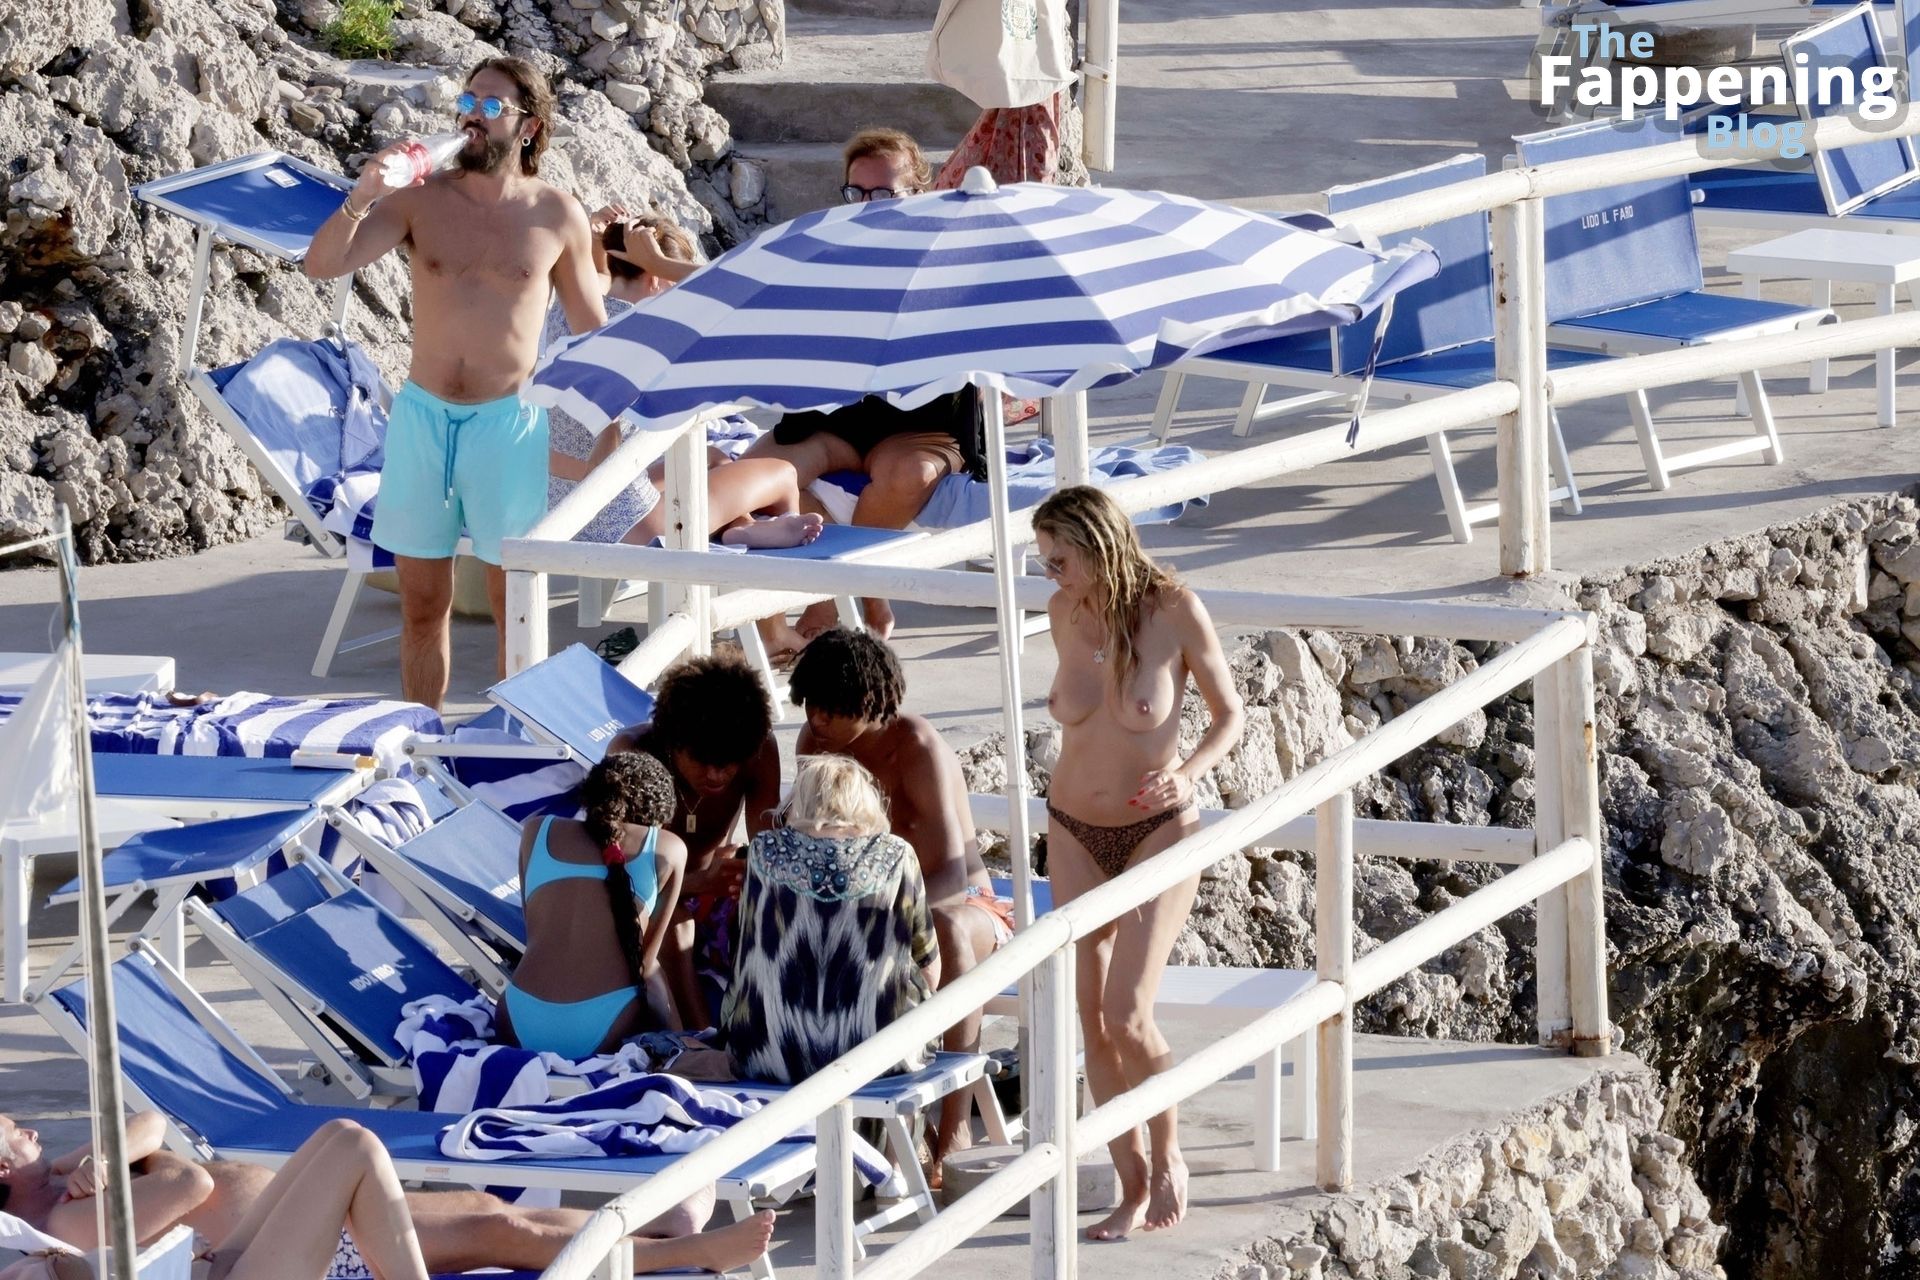 Heidi Klum Shows Off Her Nude Boobs While Enjoying a Summer Holiday with Tom Kaulitz in Capri (65 Photos)